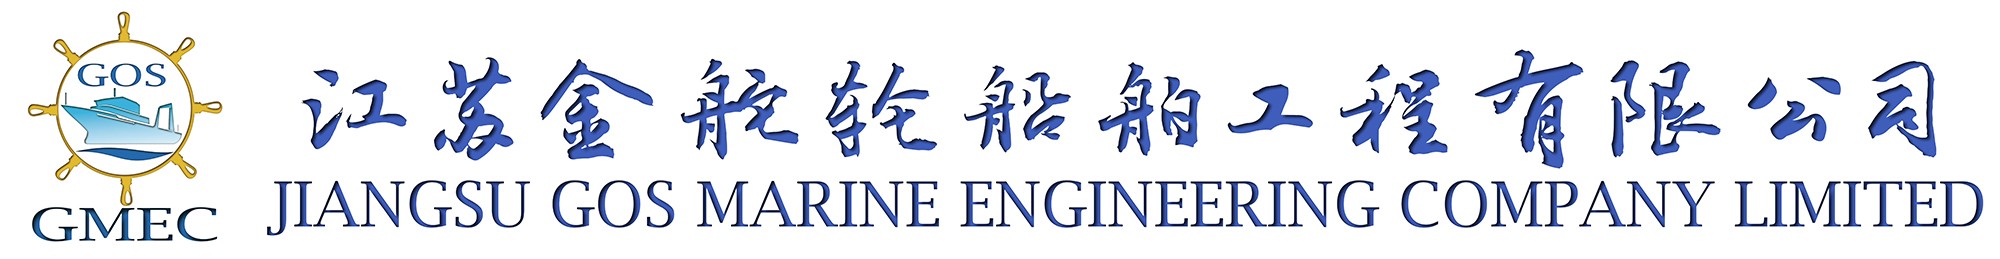 JIANGSU GOS MARINE ENGINEERING COMPANY LIMITED